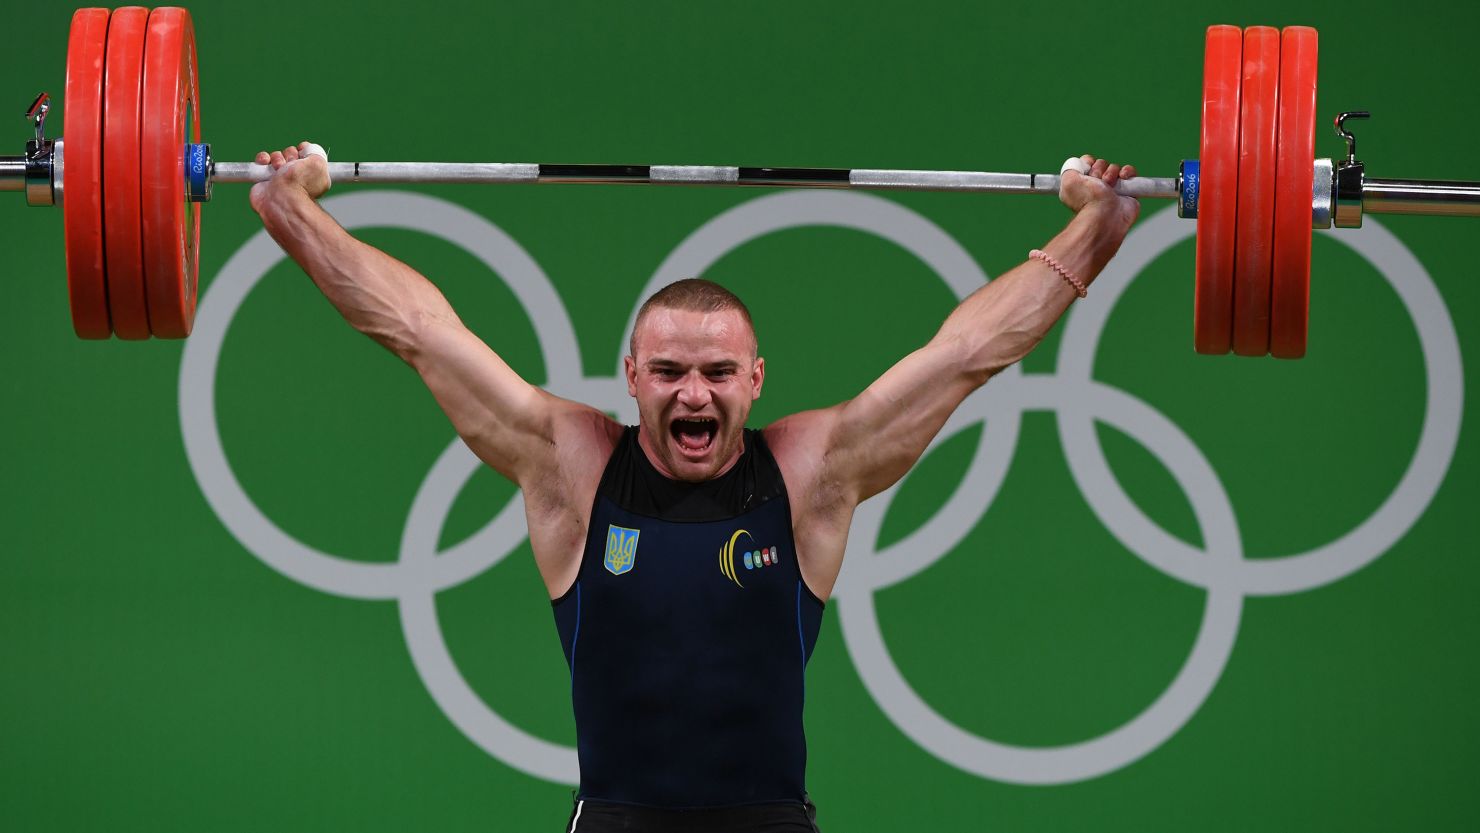 Oleksandr Pielieshenko competes at Rio 2016 for Ukraine.